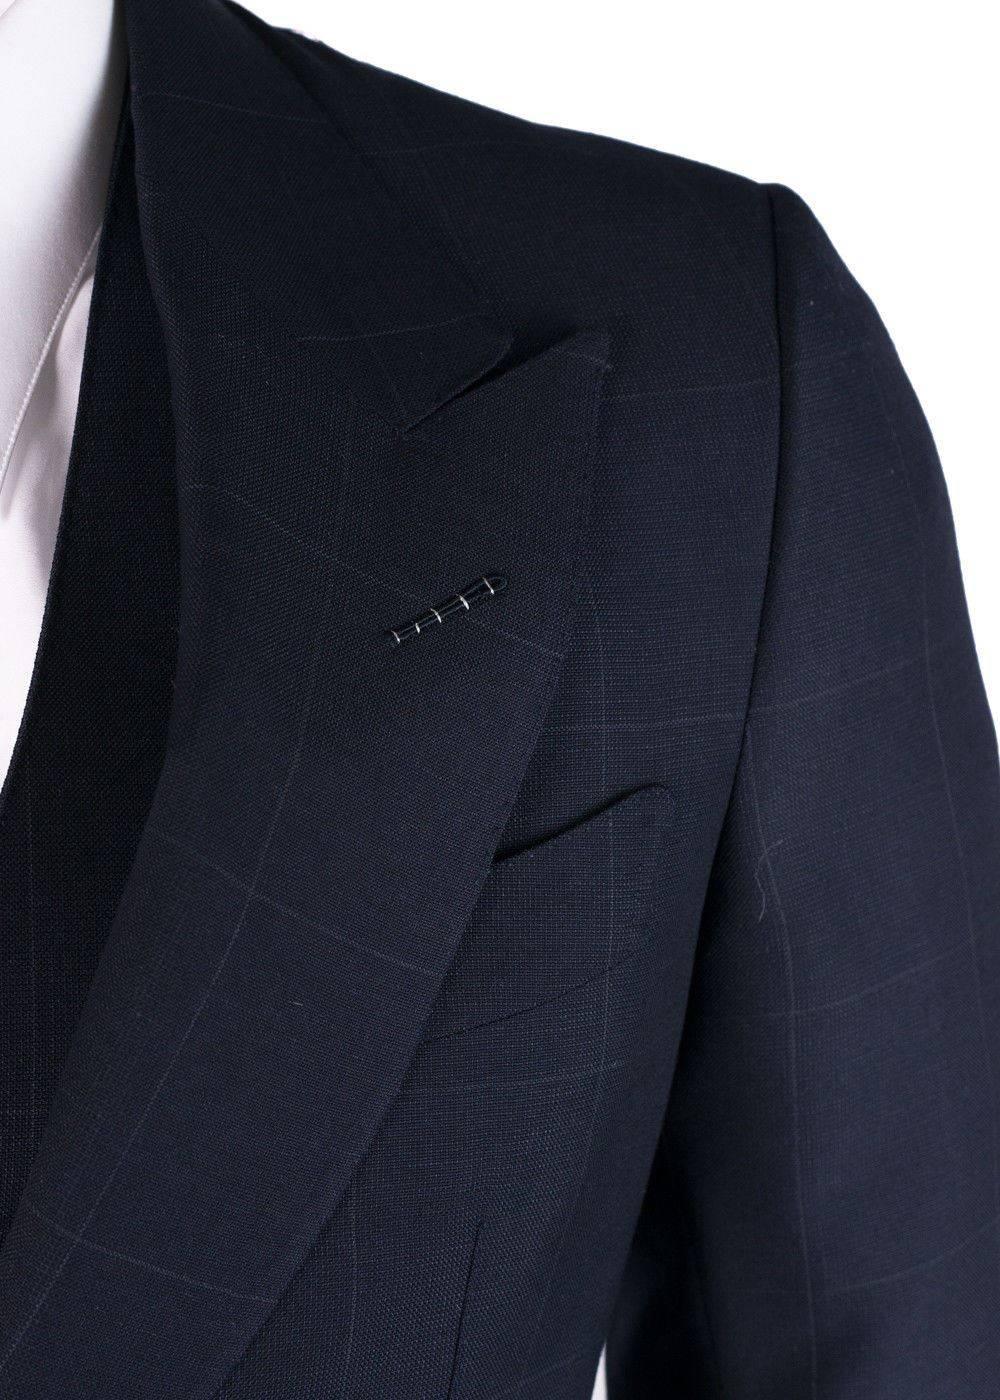 Black Tom Ford Mens Large Check Navy Wool Blend Shelton 3 Piece Suit For Sale